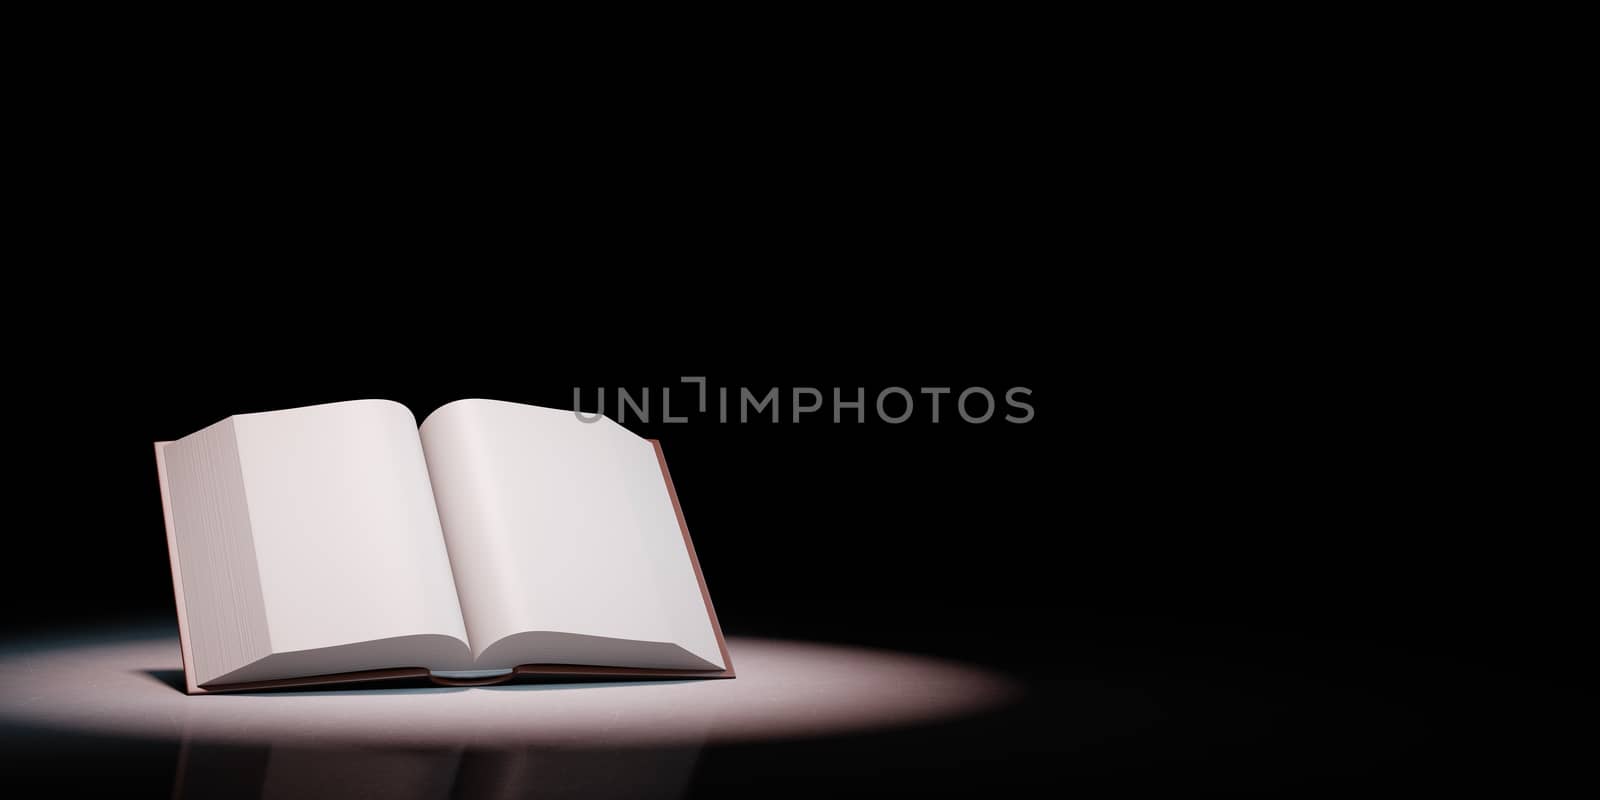 Open Book Spotlighted on Black Background 3D Illustration by make